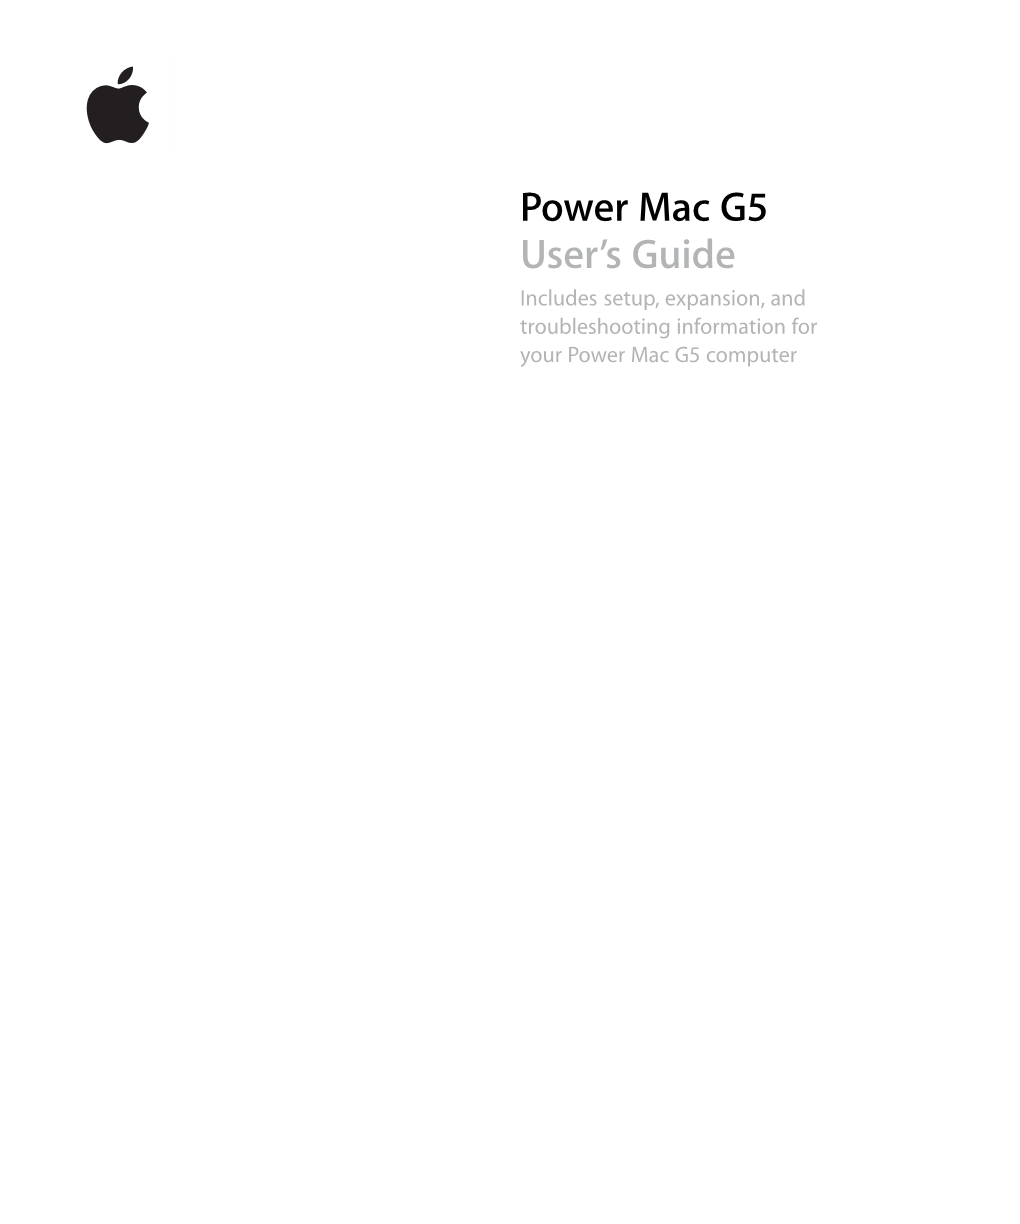 Power Mac G5 User's Guide